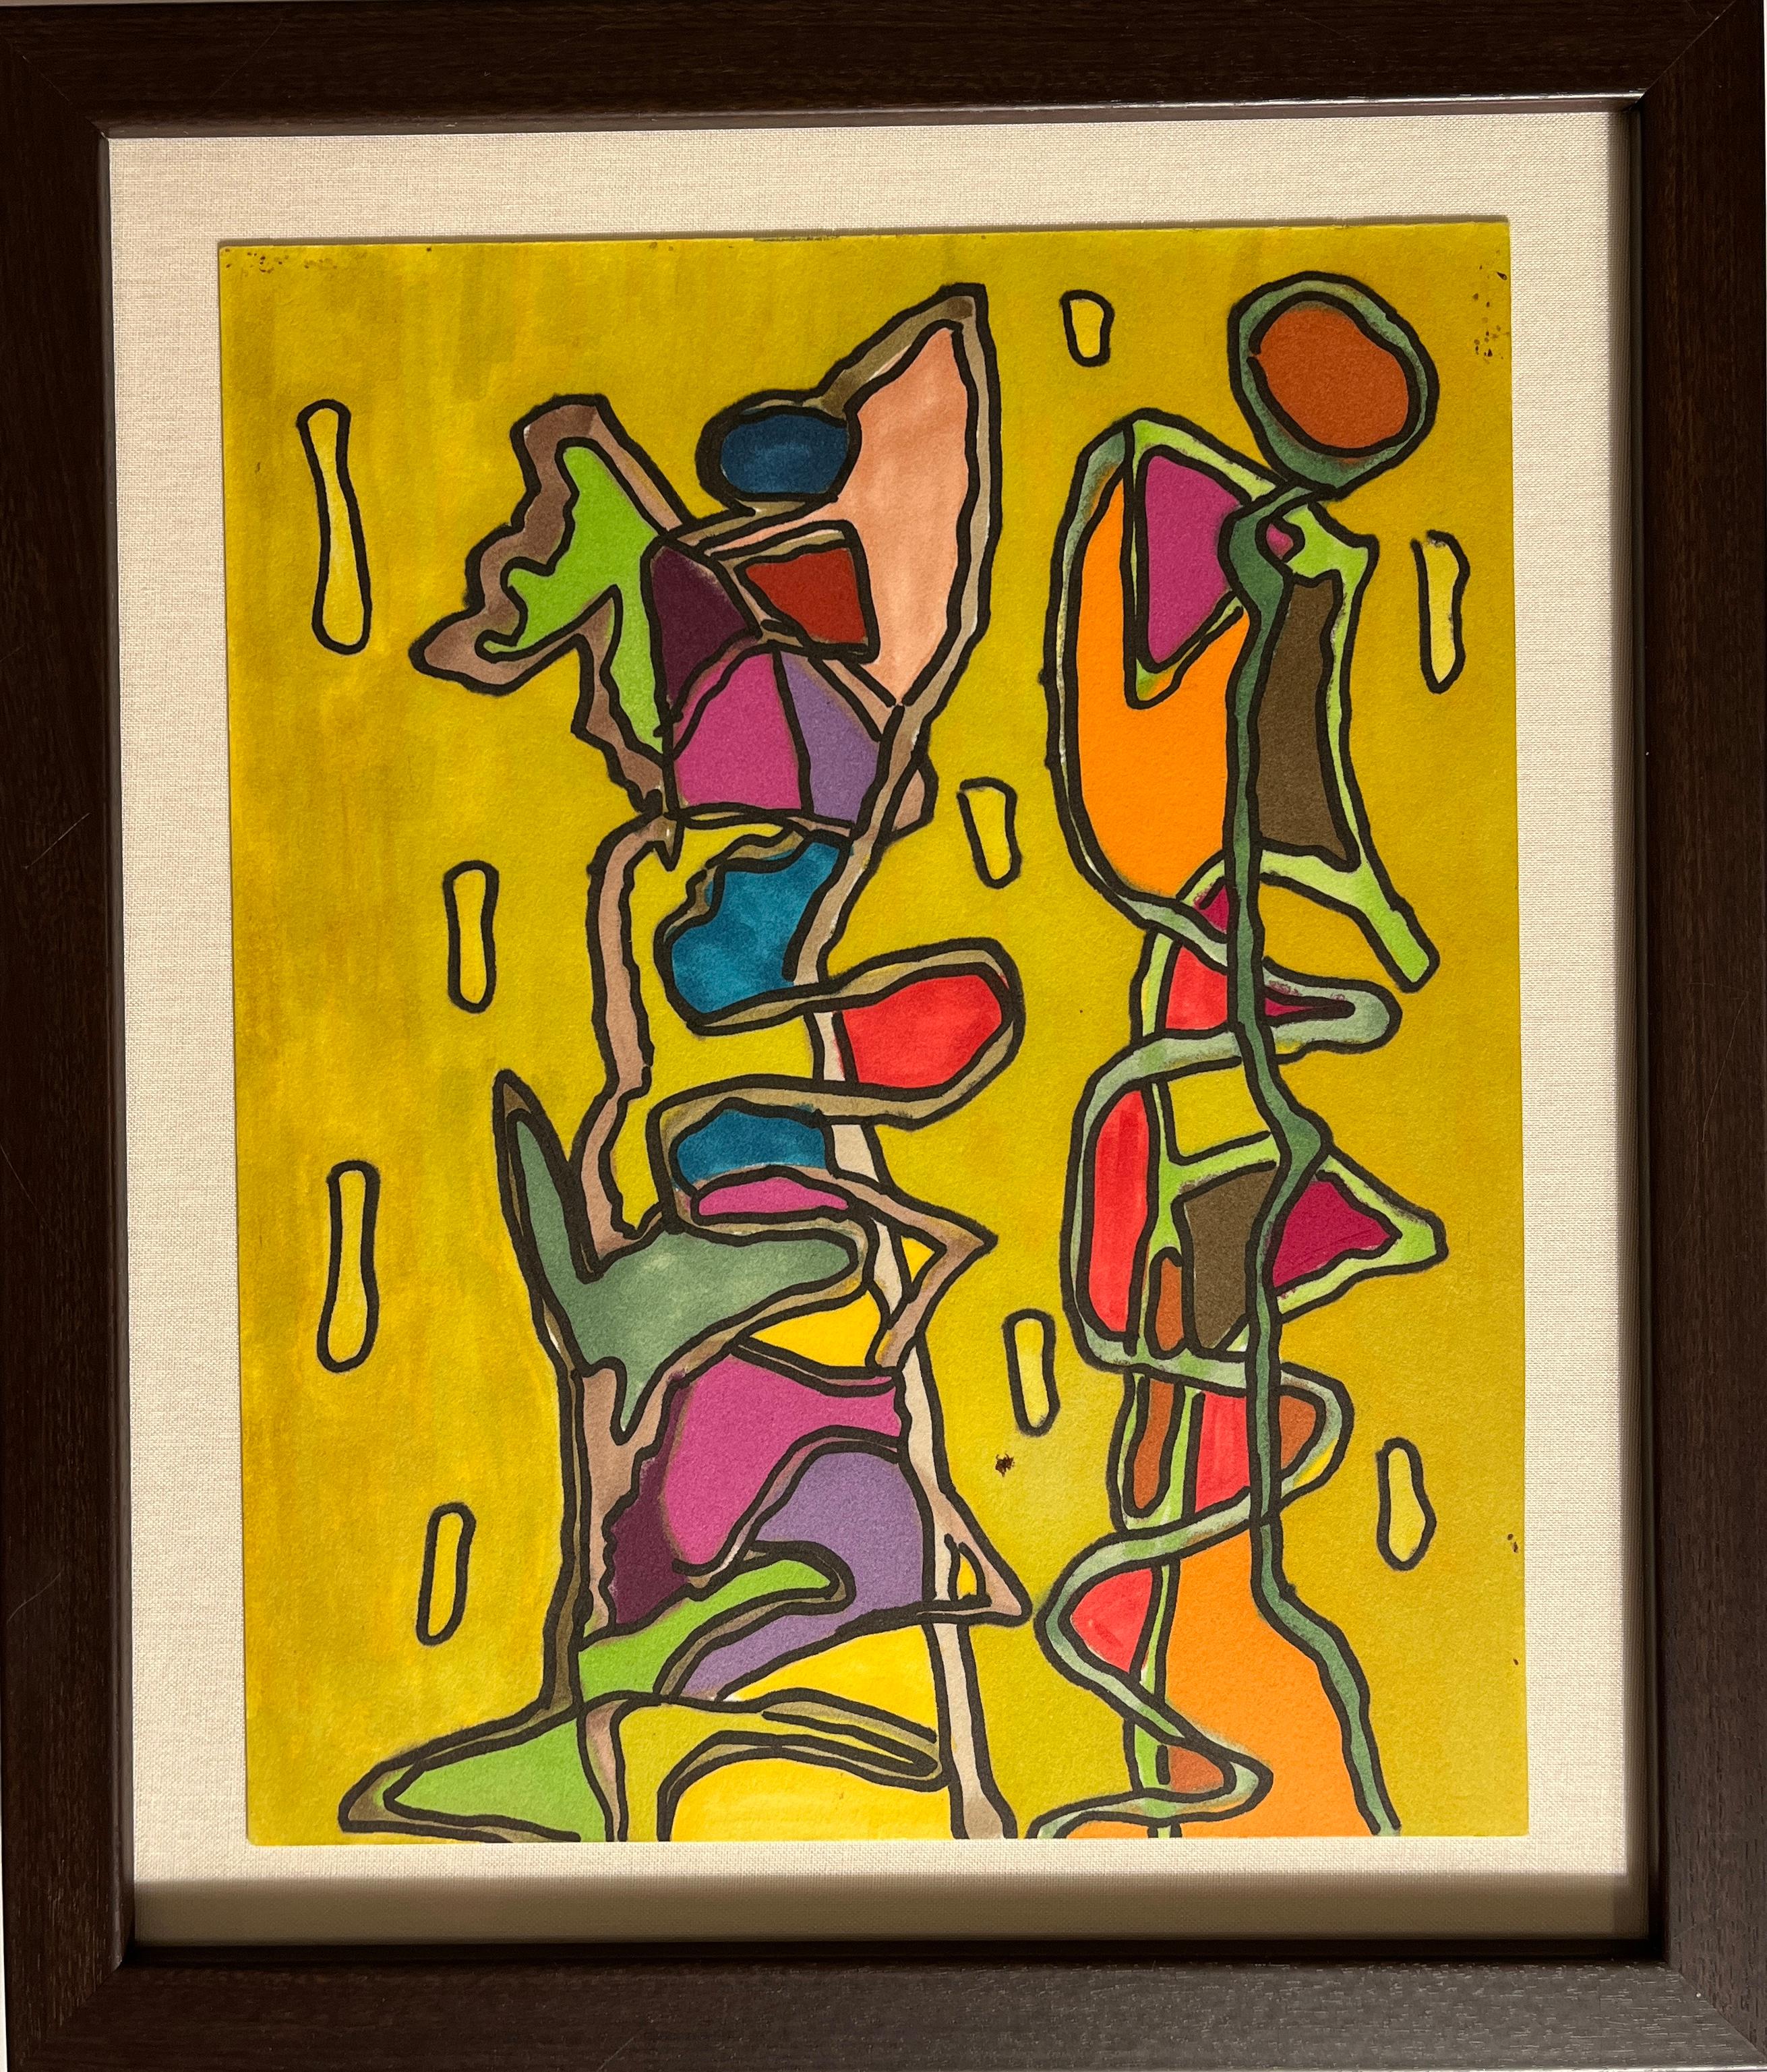 John Peters Abstract Drawing - 1980s "Mustard DNA" Abstract Marker Drawing NYC Artist